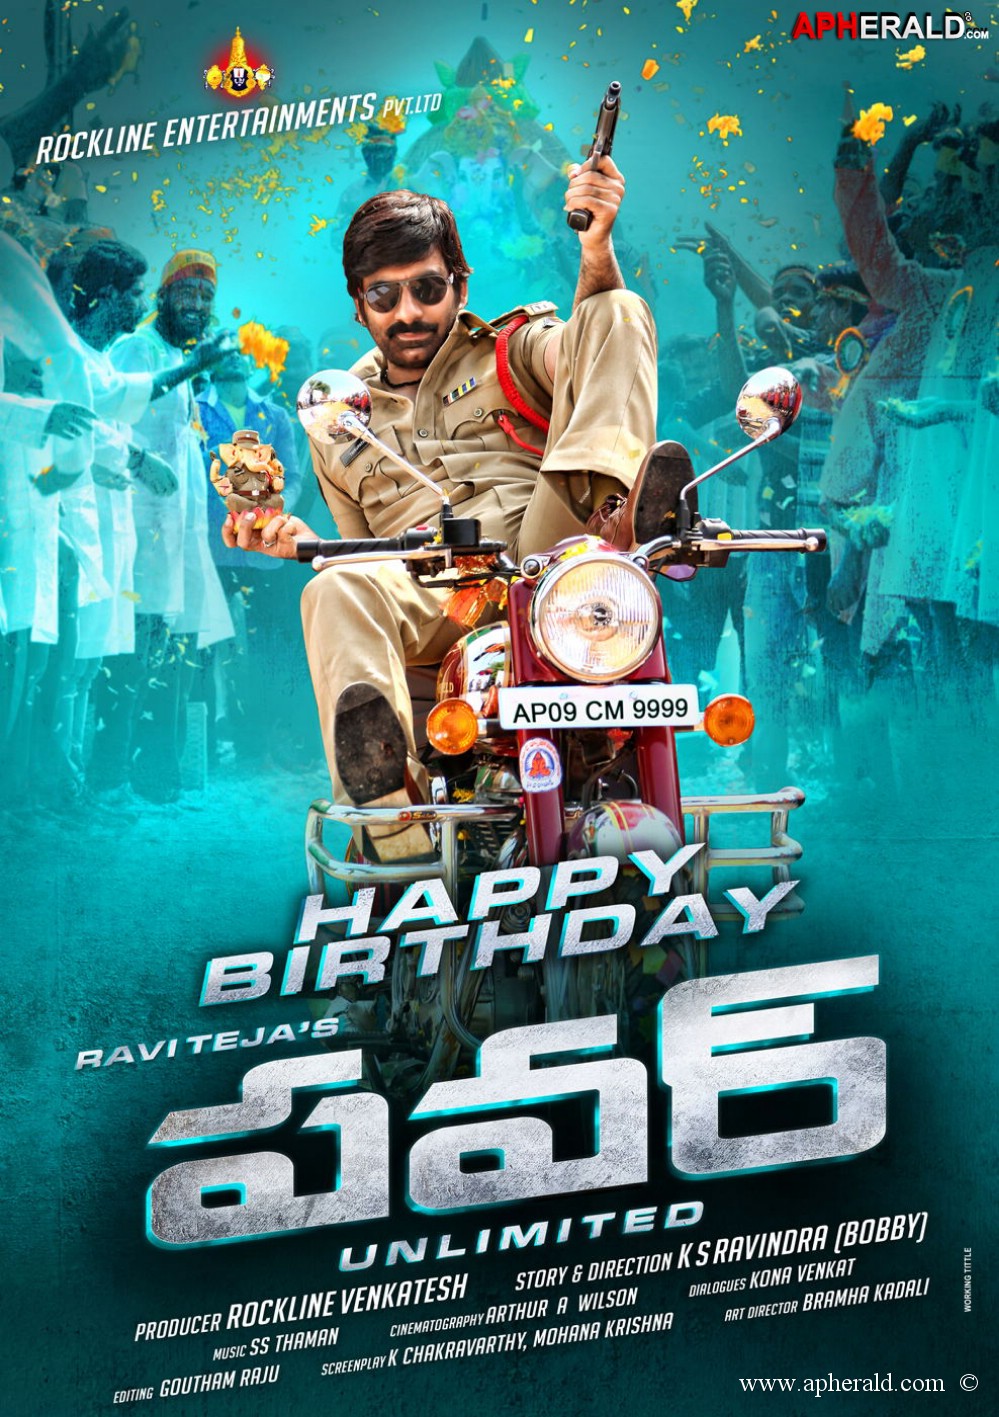 Power (2014 Telugu film)